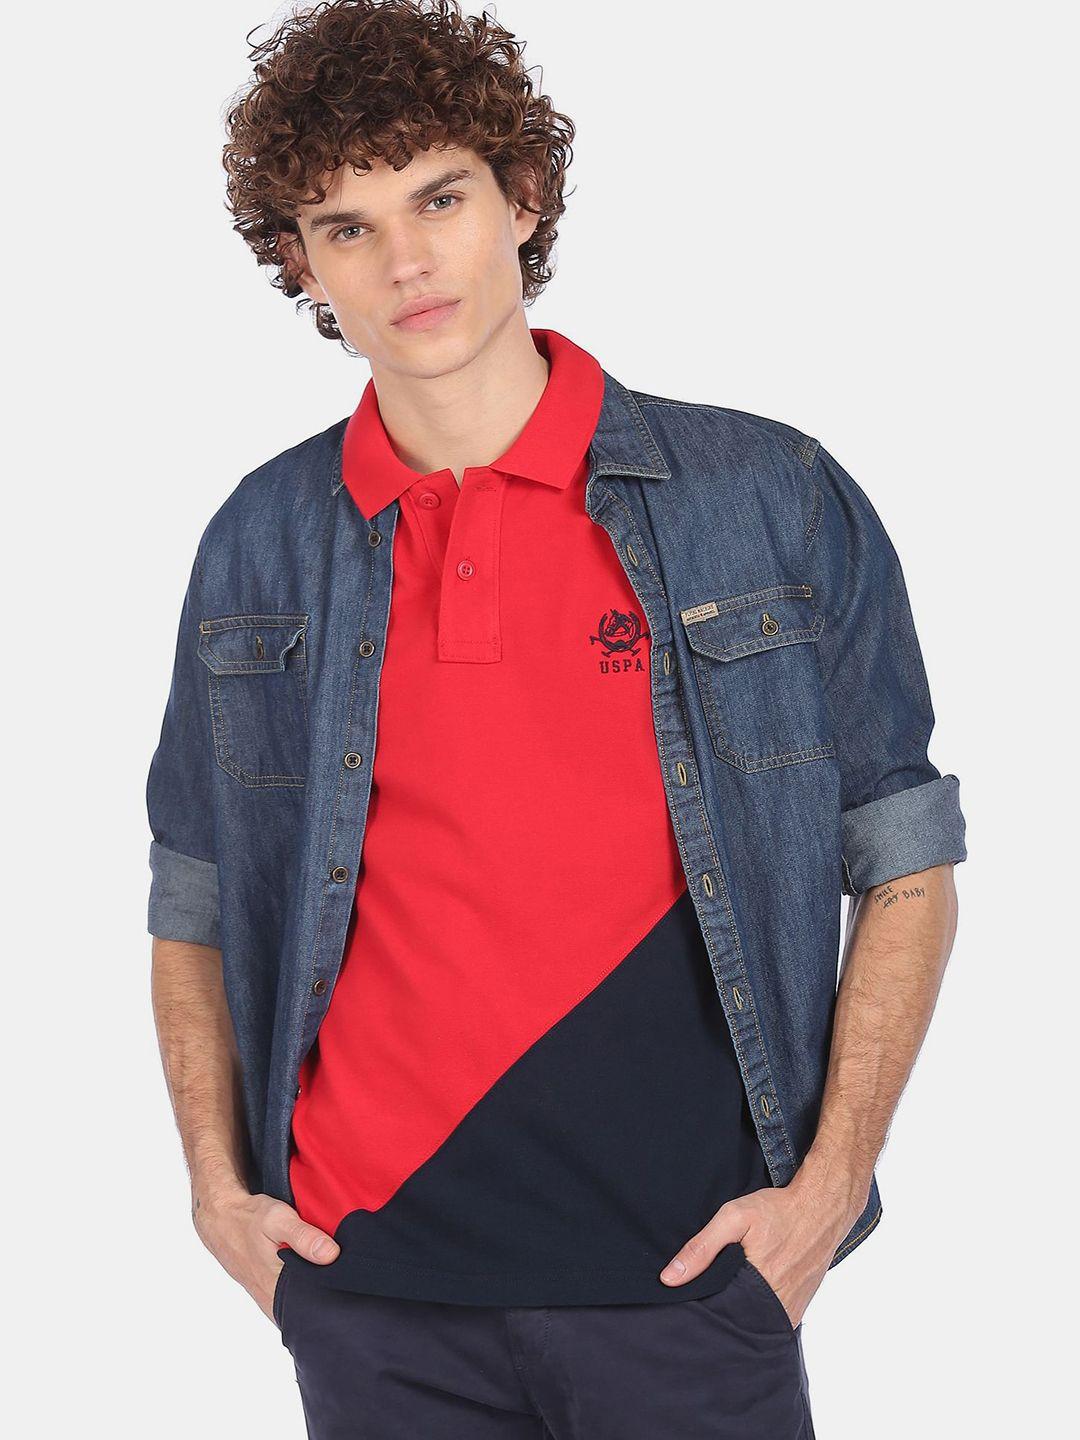 u s polo assn men red & navy blue colourblocked polo collar pure cotton slim fit t-shirt